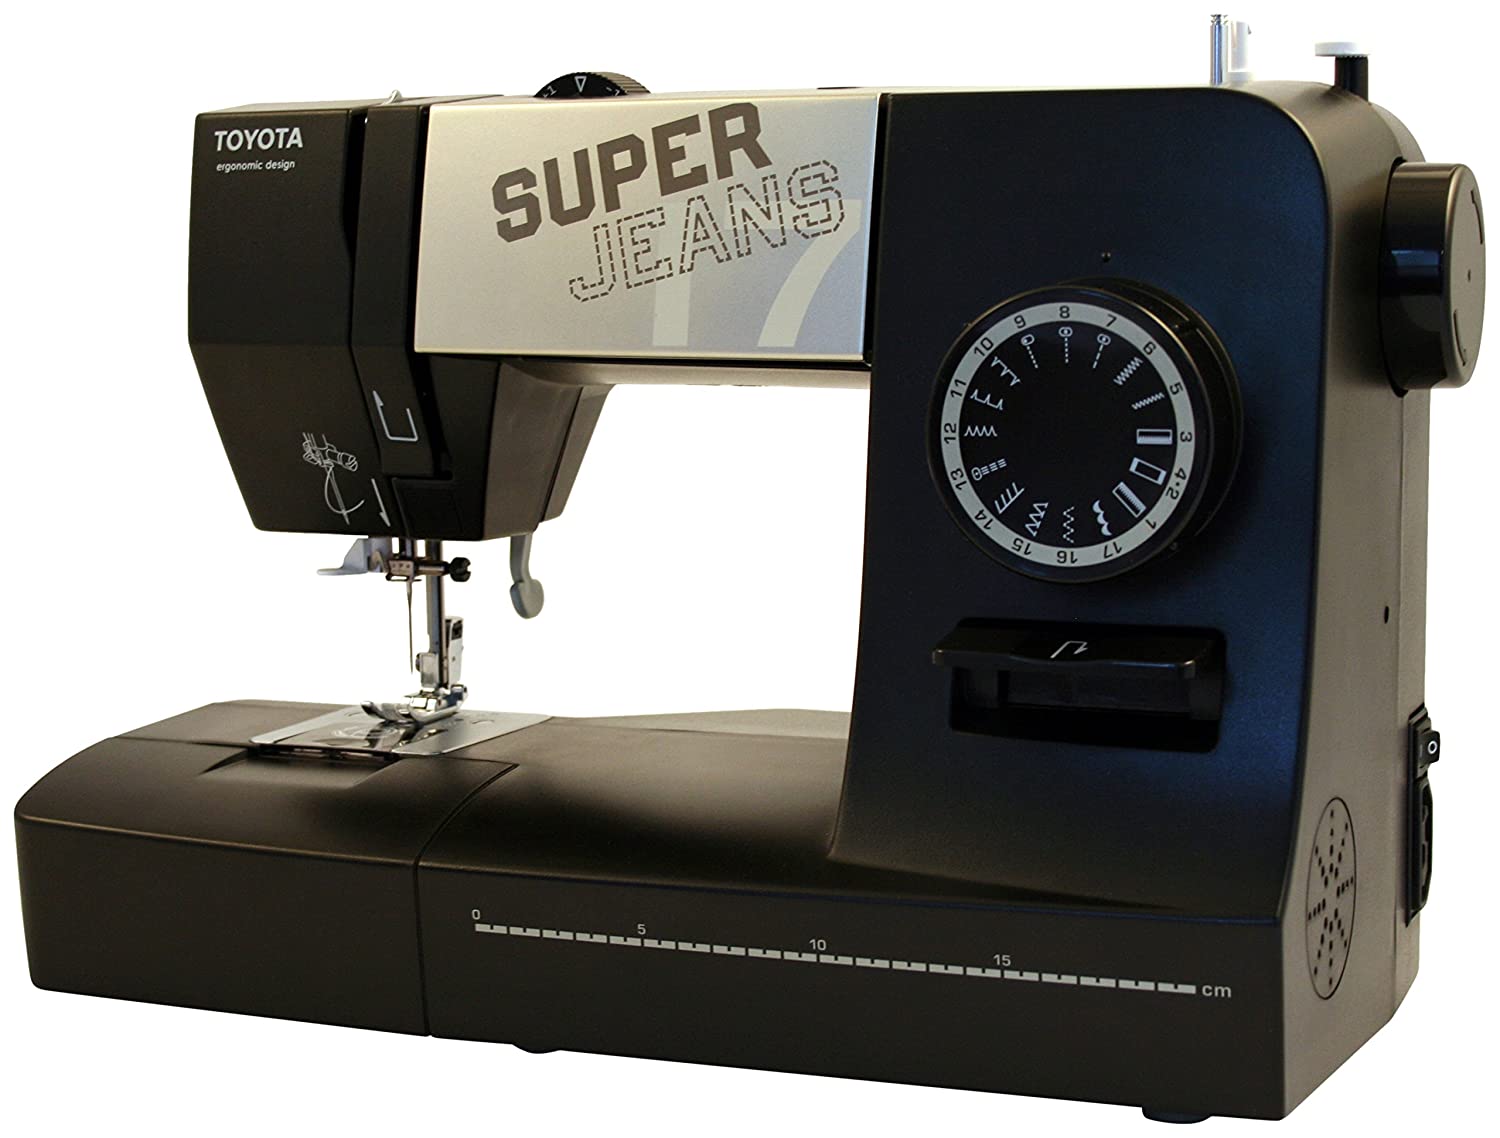 TOYOTA Super Jeans J17XL Sewing Machine